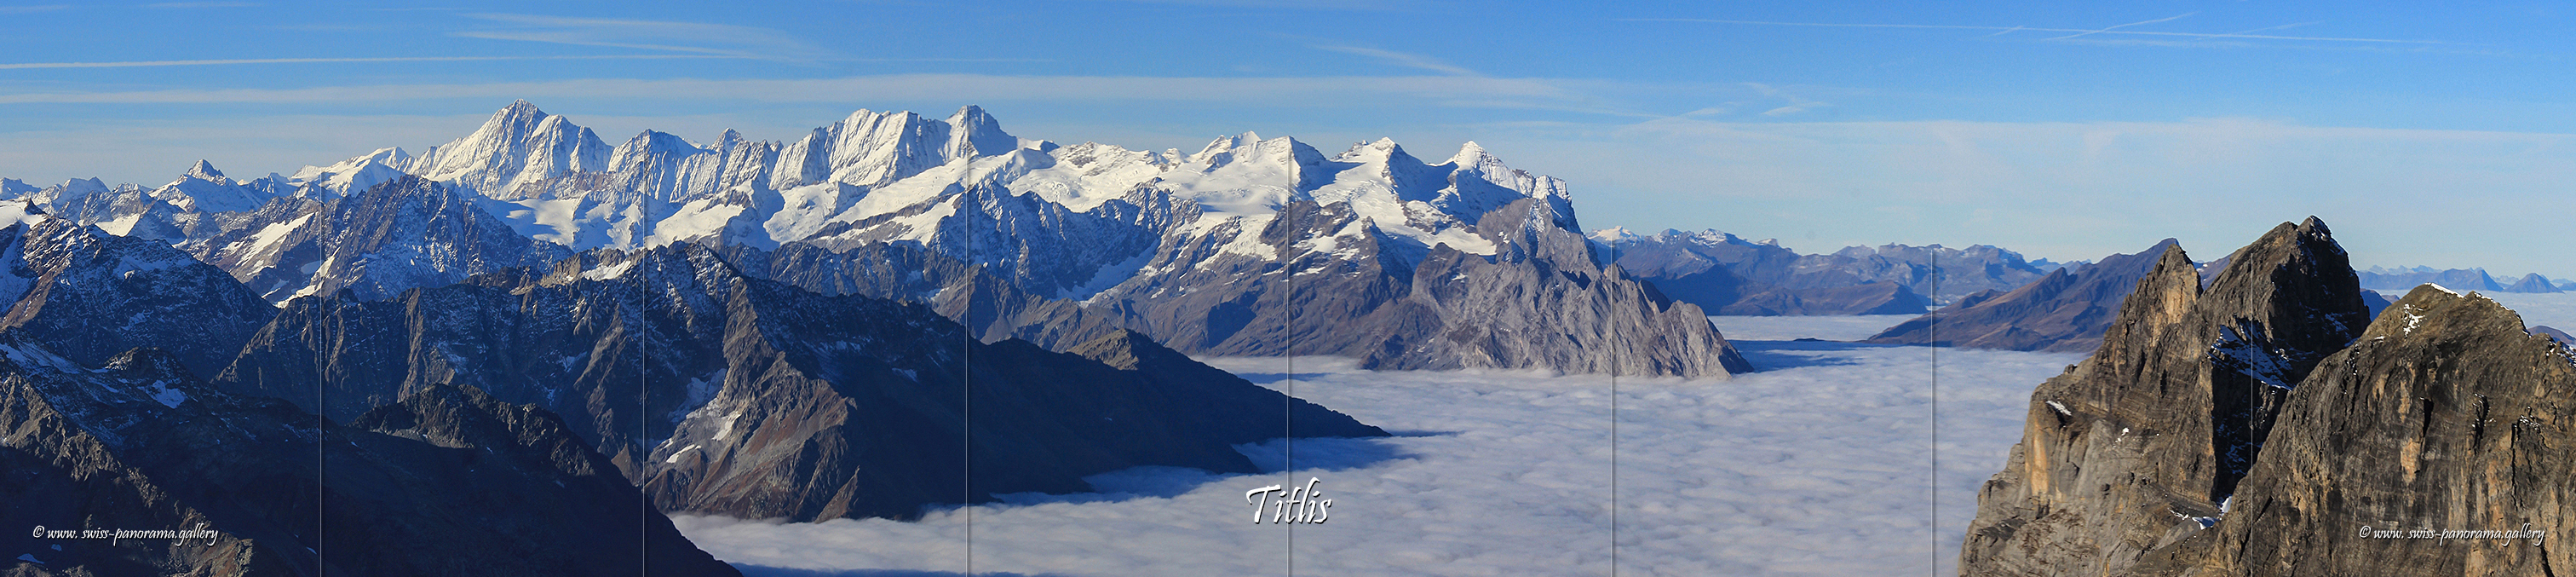 Switzerland panorama Titlis